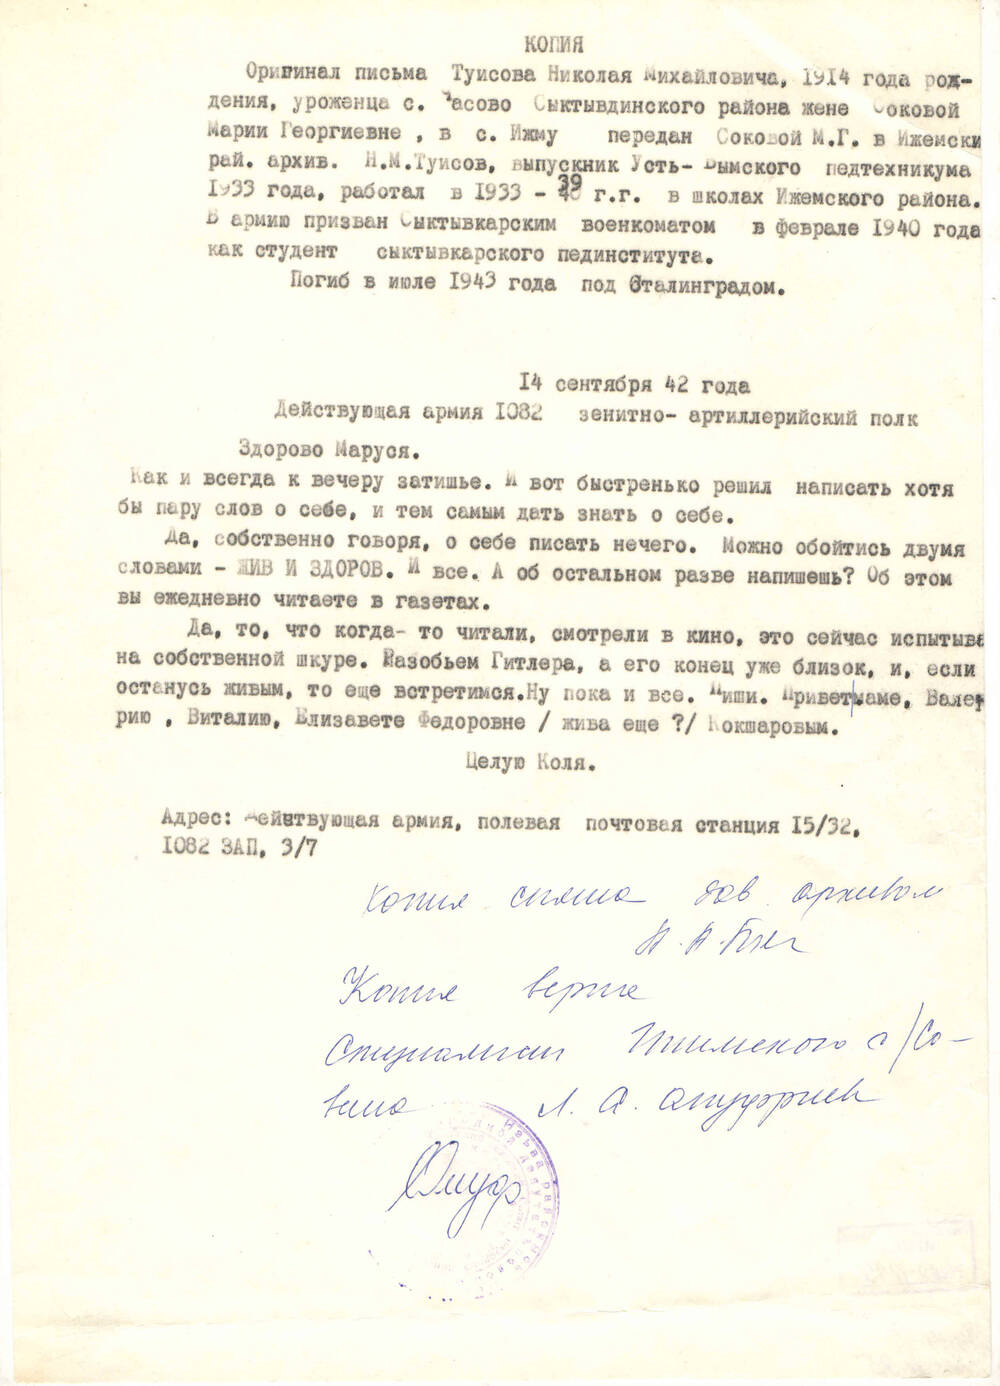 Копия письма с фронта Туесова Н.М. Соковой М.Г. в с. Ижма от 14.09.1942 года (оригинал хранится в Ижемском архиве)